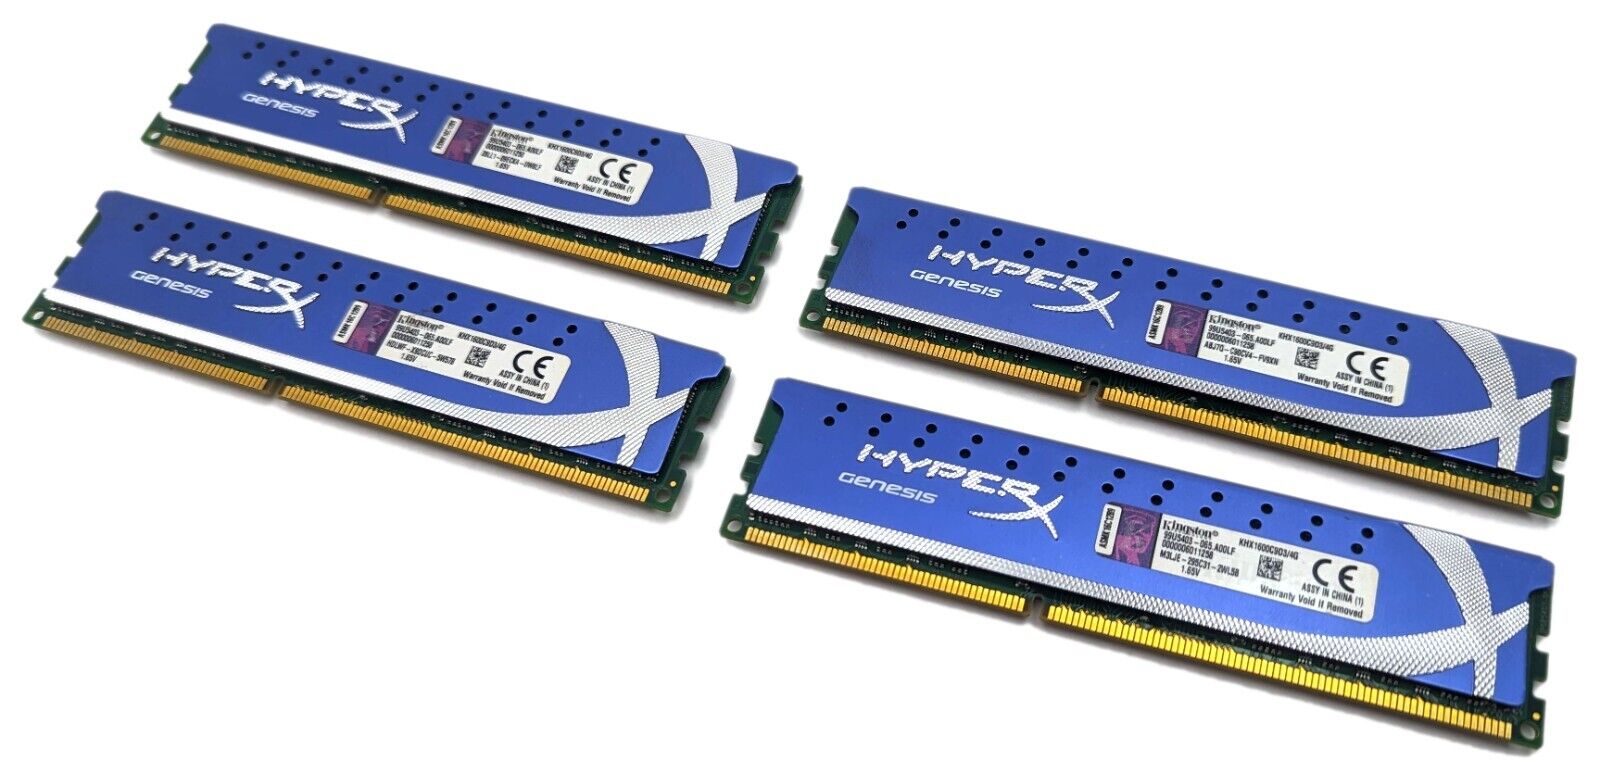 Kingston HyperX Genesis 16GB Kit (4x4GB) DDR3 1600 MHz Memory RAM KHX1600C9D3/4G